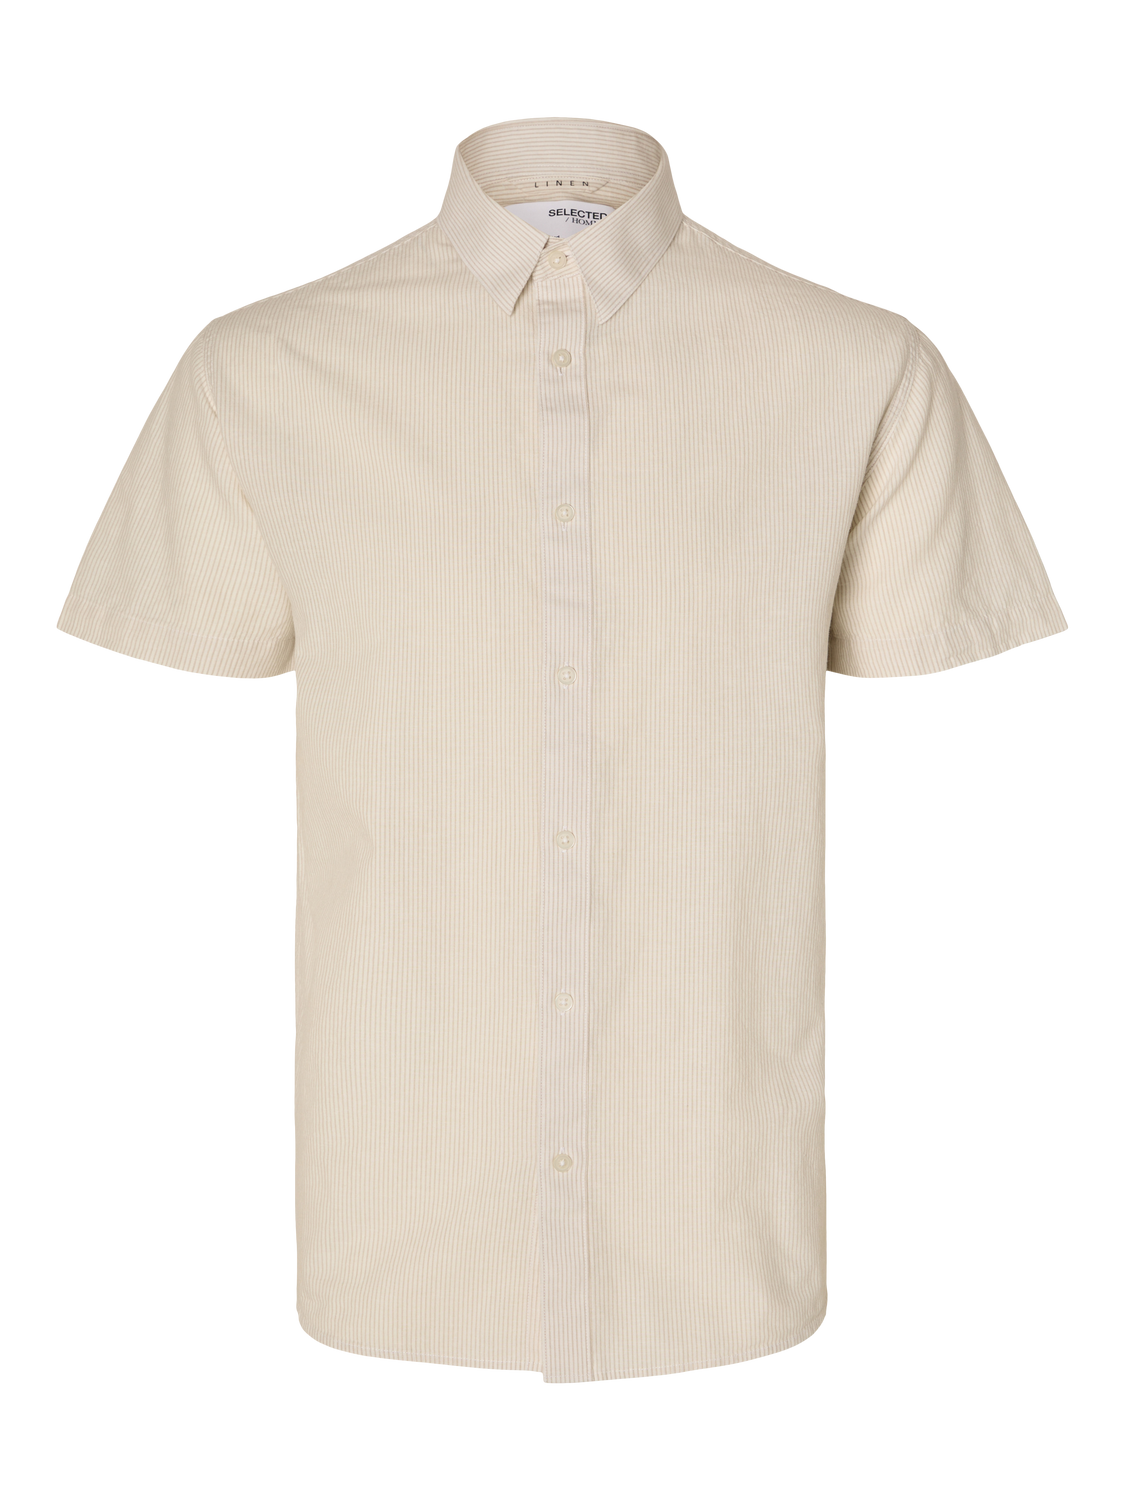 SLHREG-NEW Shirts - Pure Cashmere